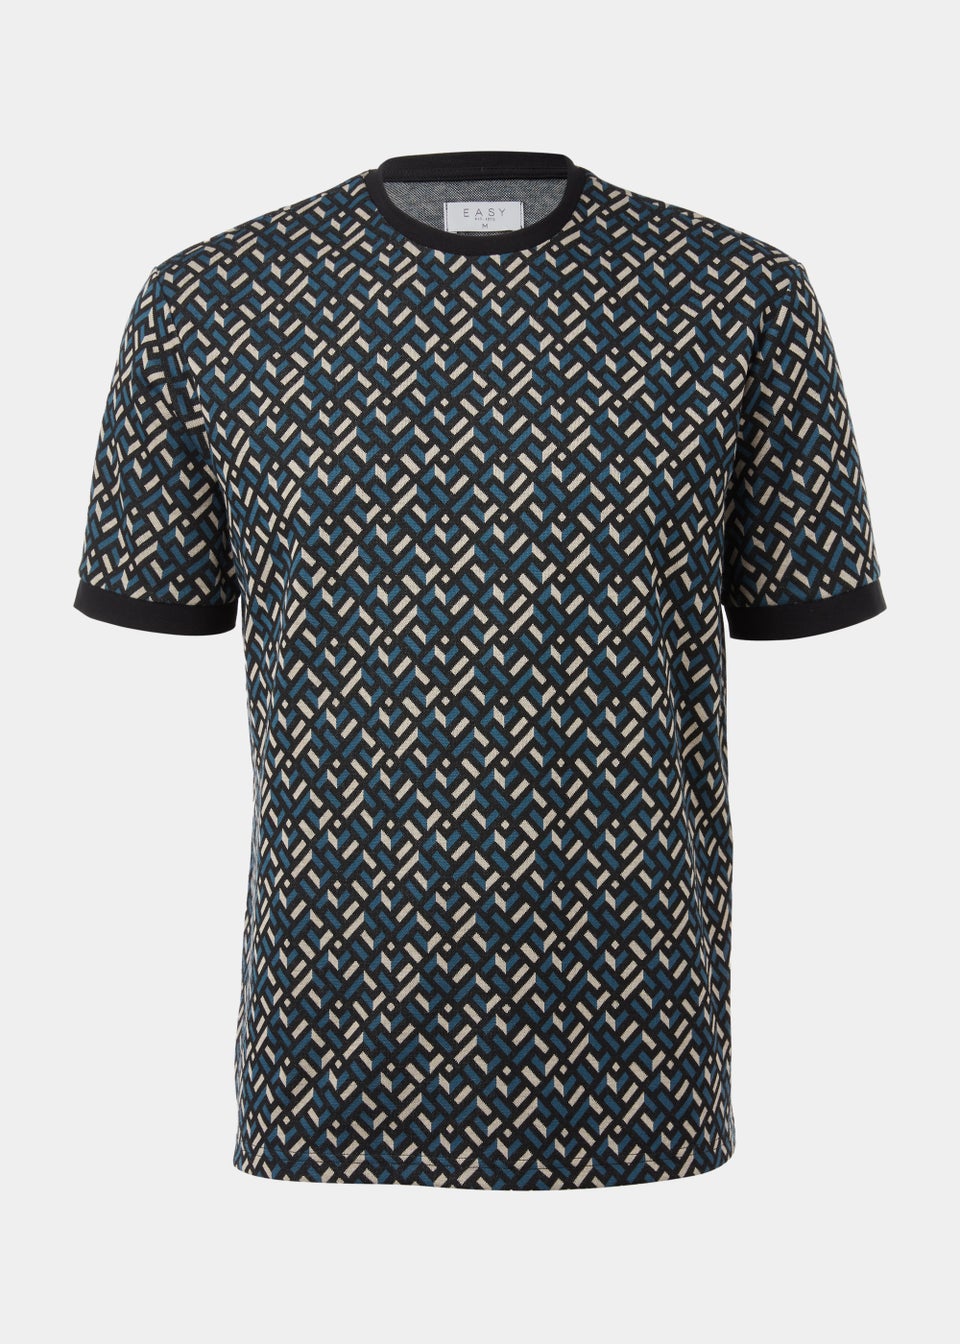 Black & Teal Geo Jacquard T-Shirt - Matalan